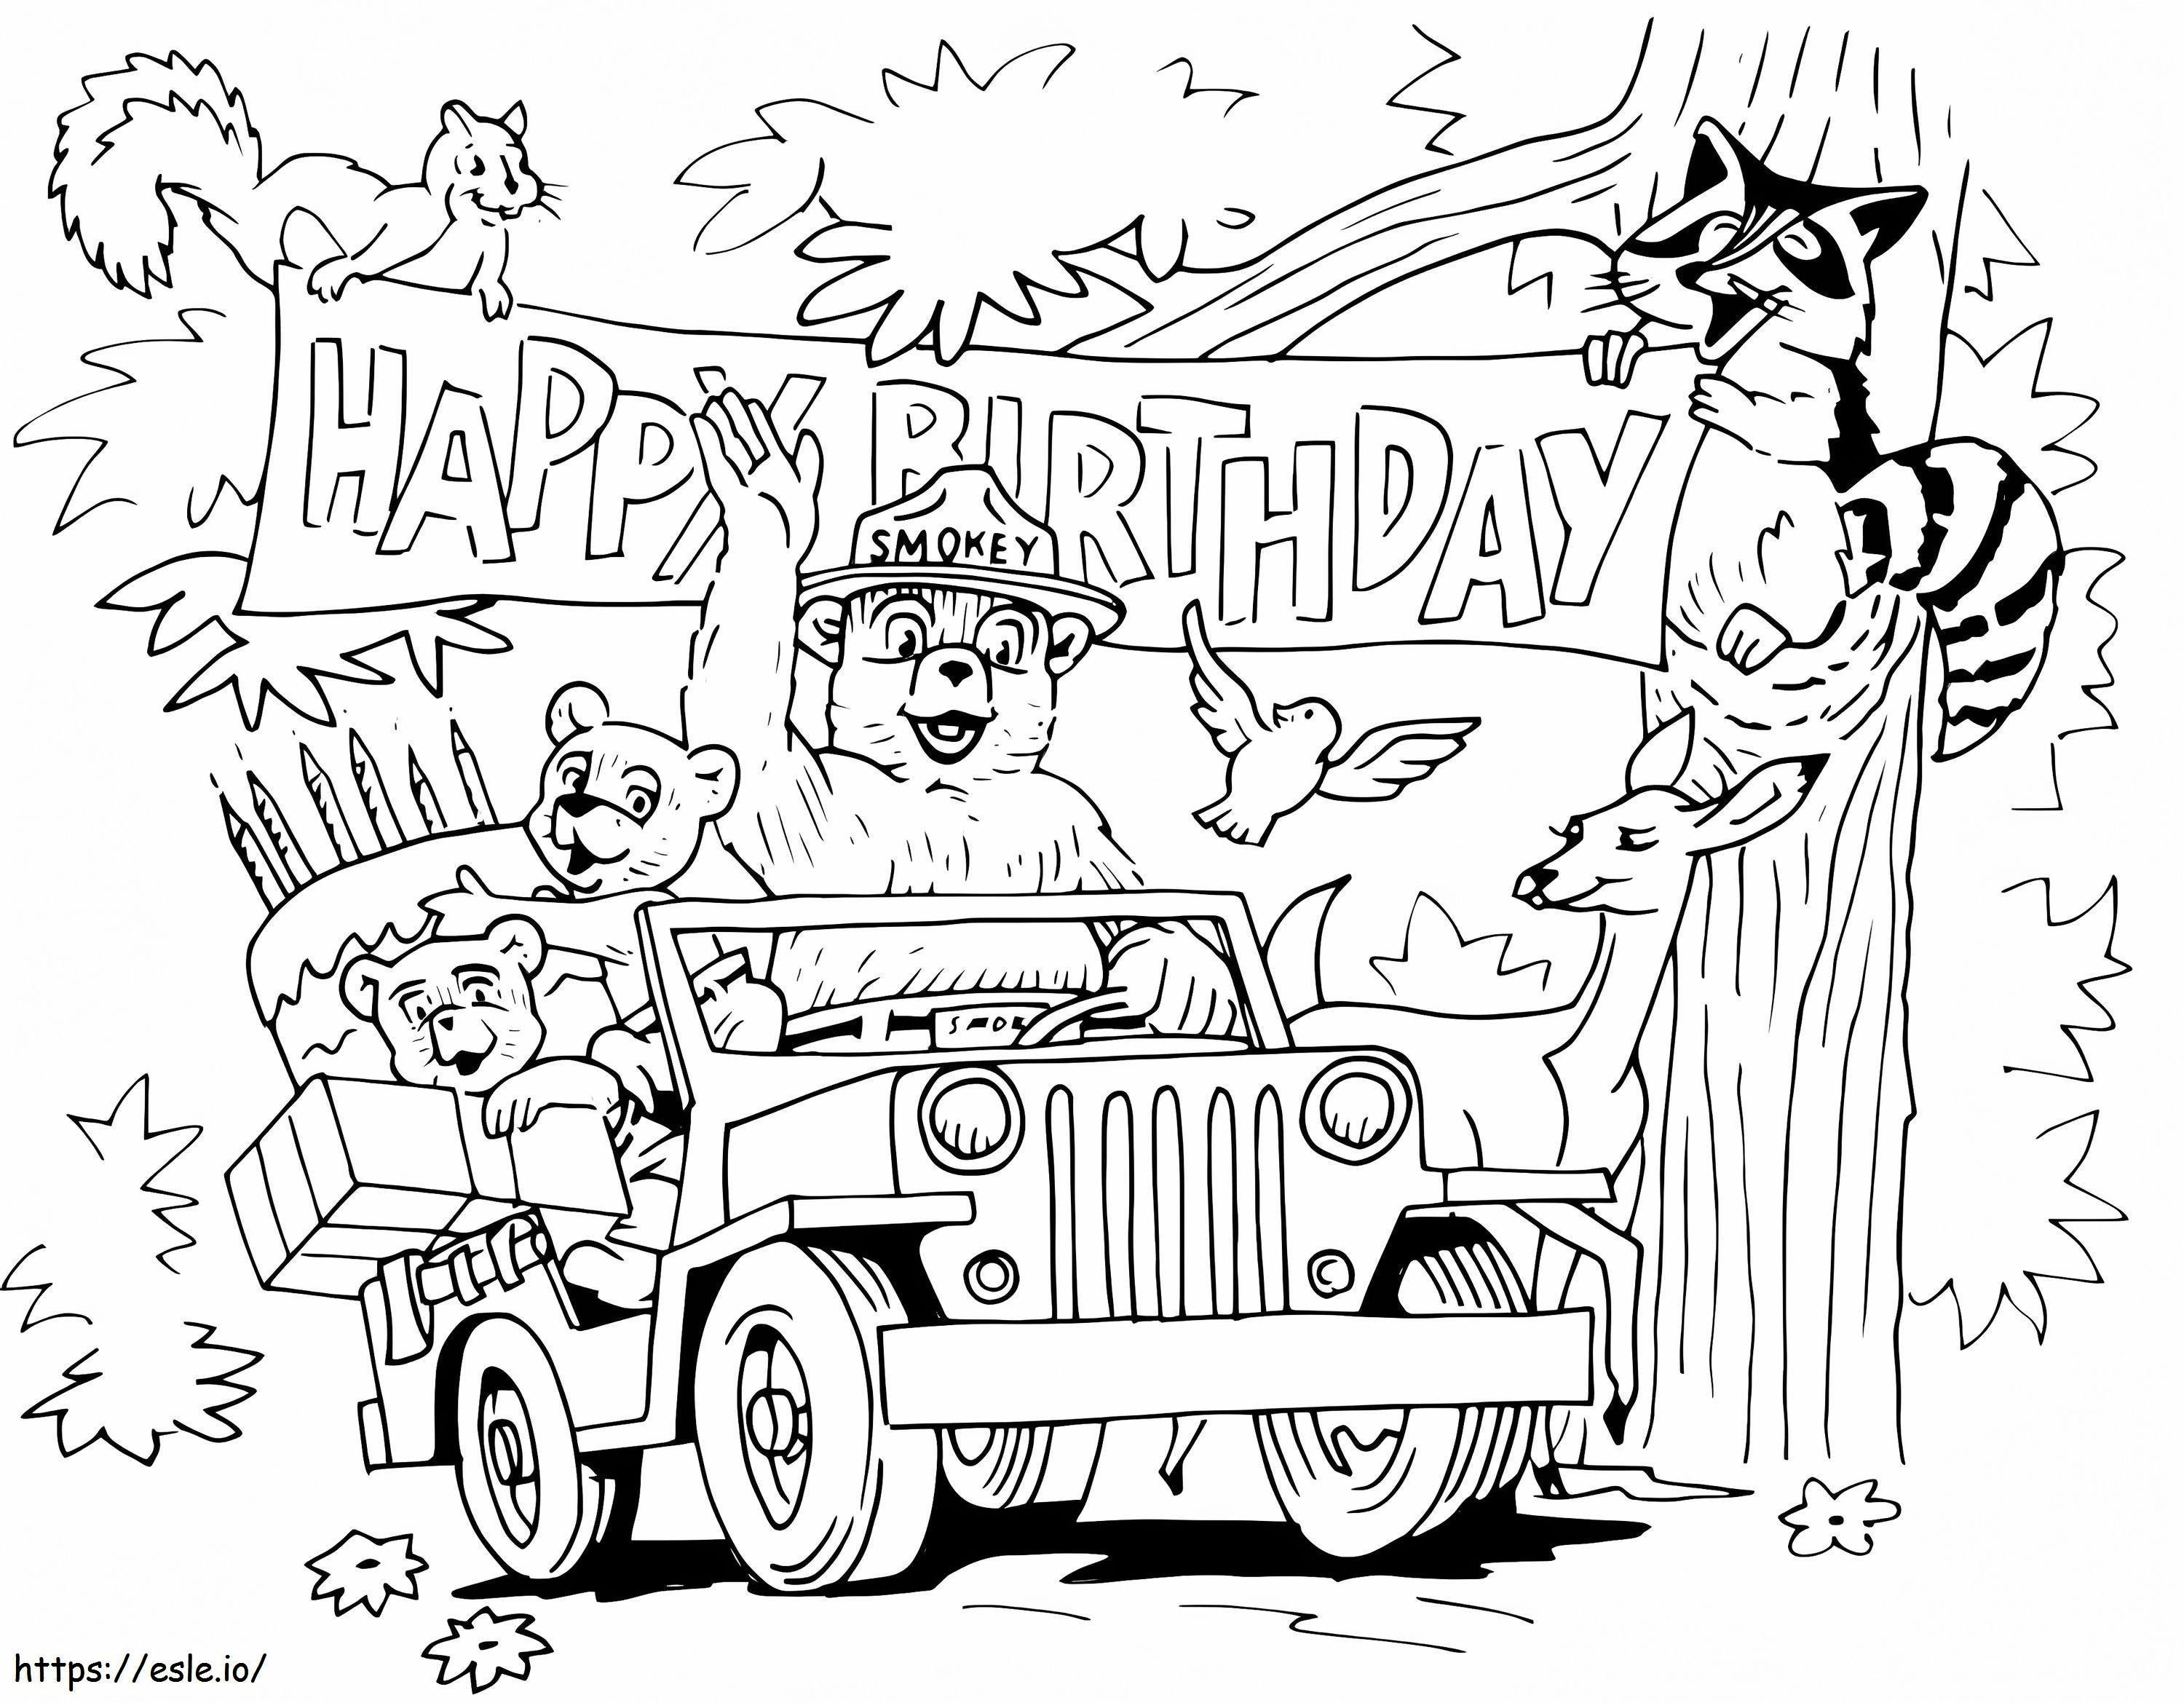 Happy Birthday Smokey Bear 1 coloring page